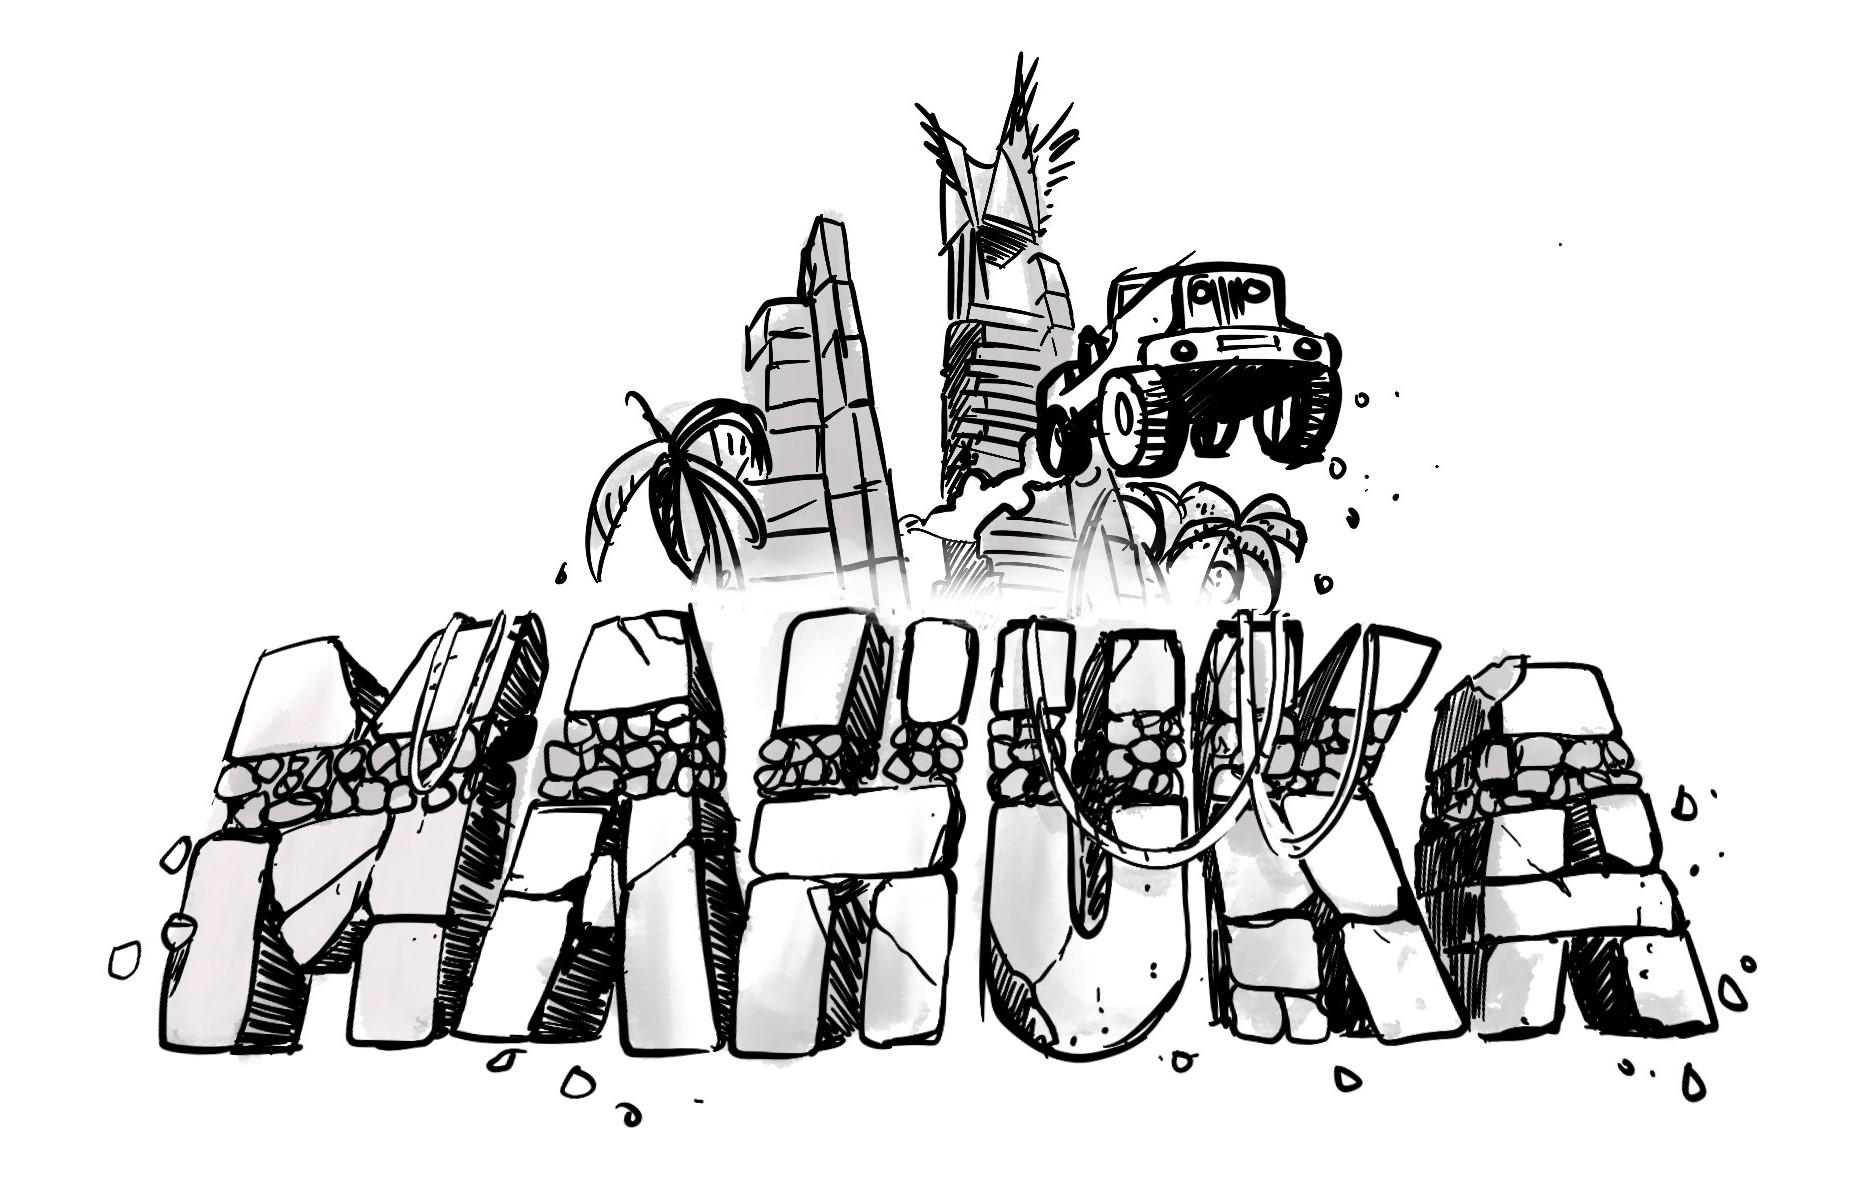 Logo de l'attraction Mahuka à Walibi Rhône-Alpes